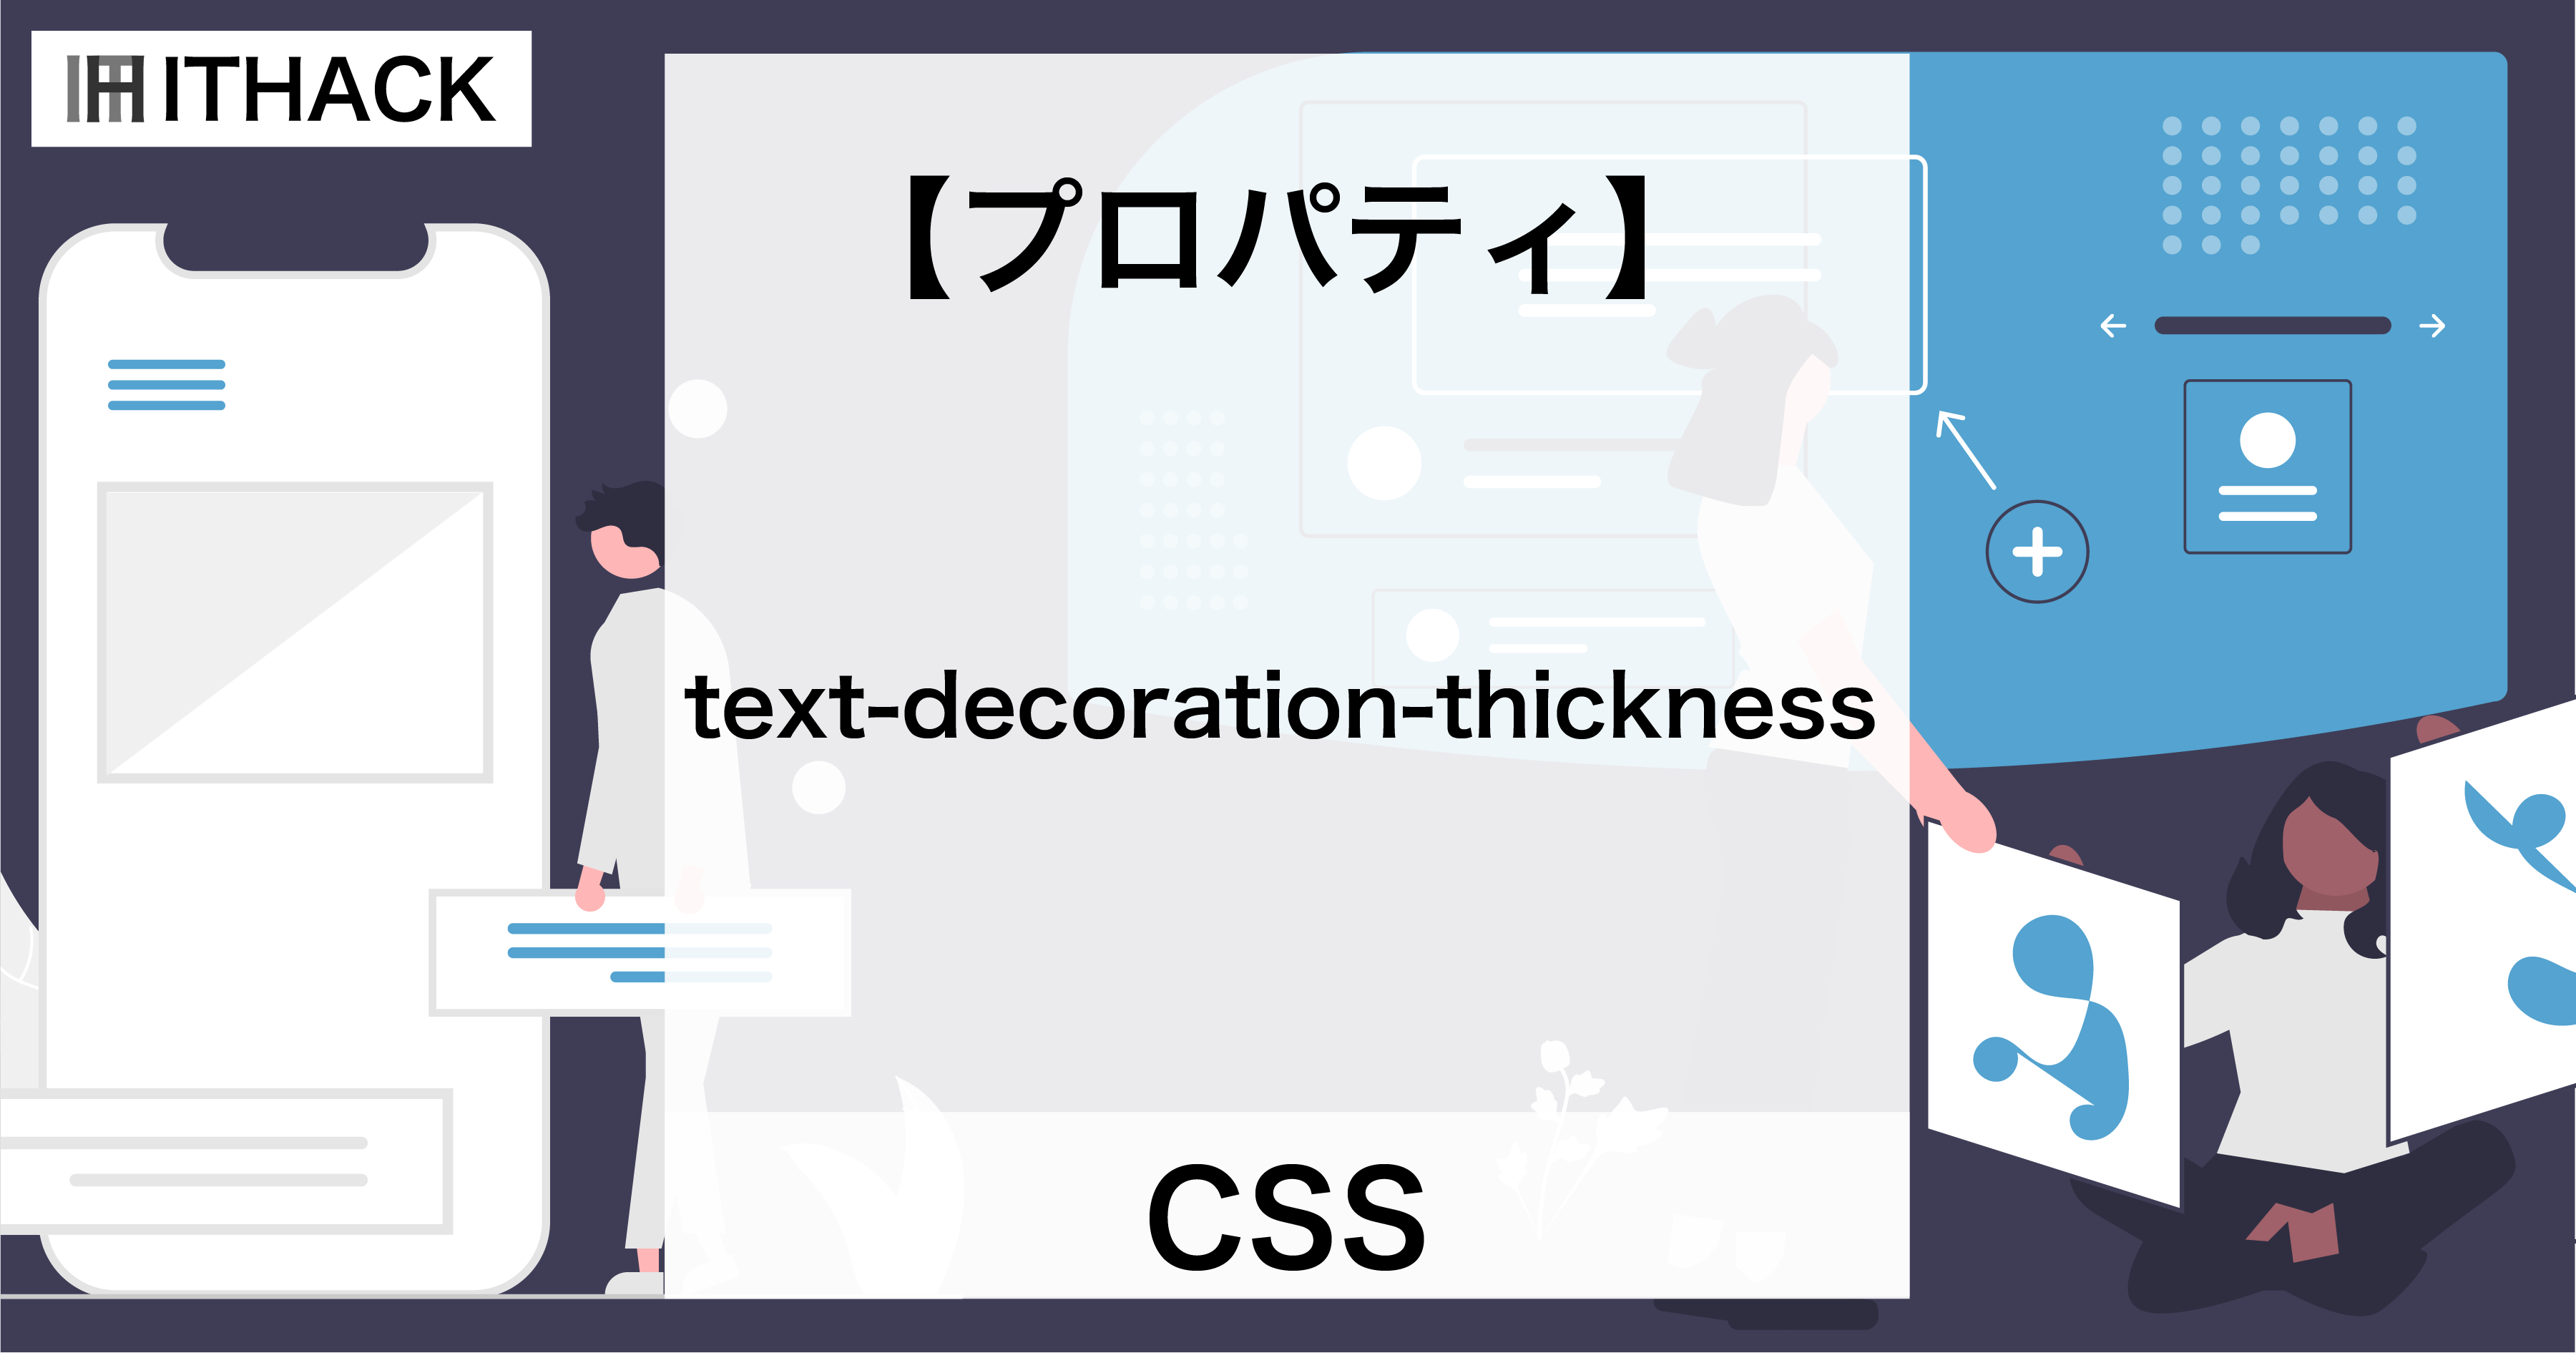 【CSS】text-decoration-thickness - テキストの装飾（線の太さ）